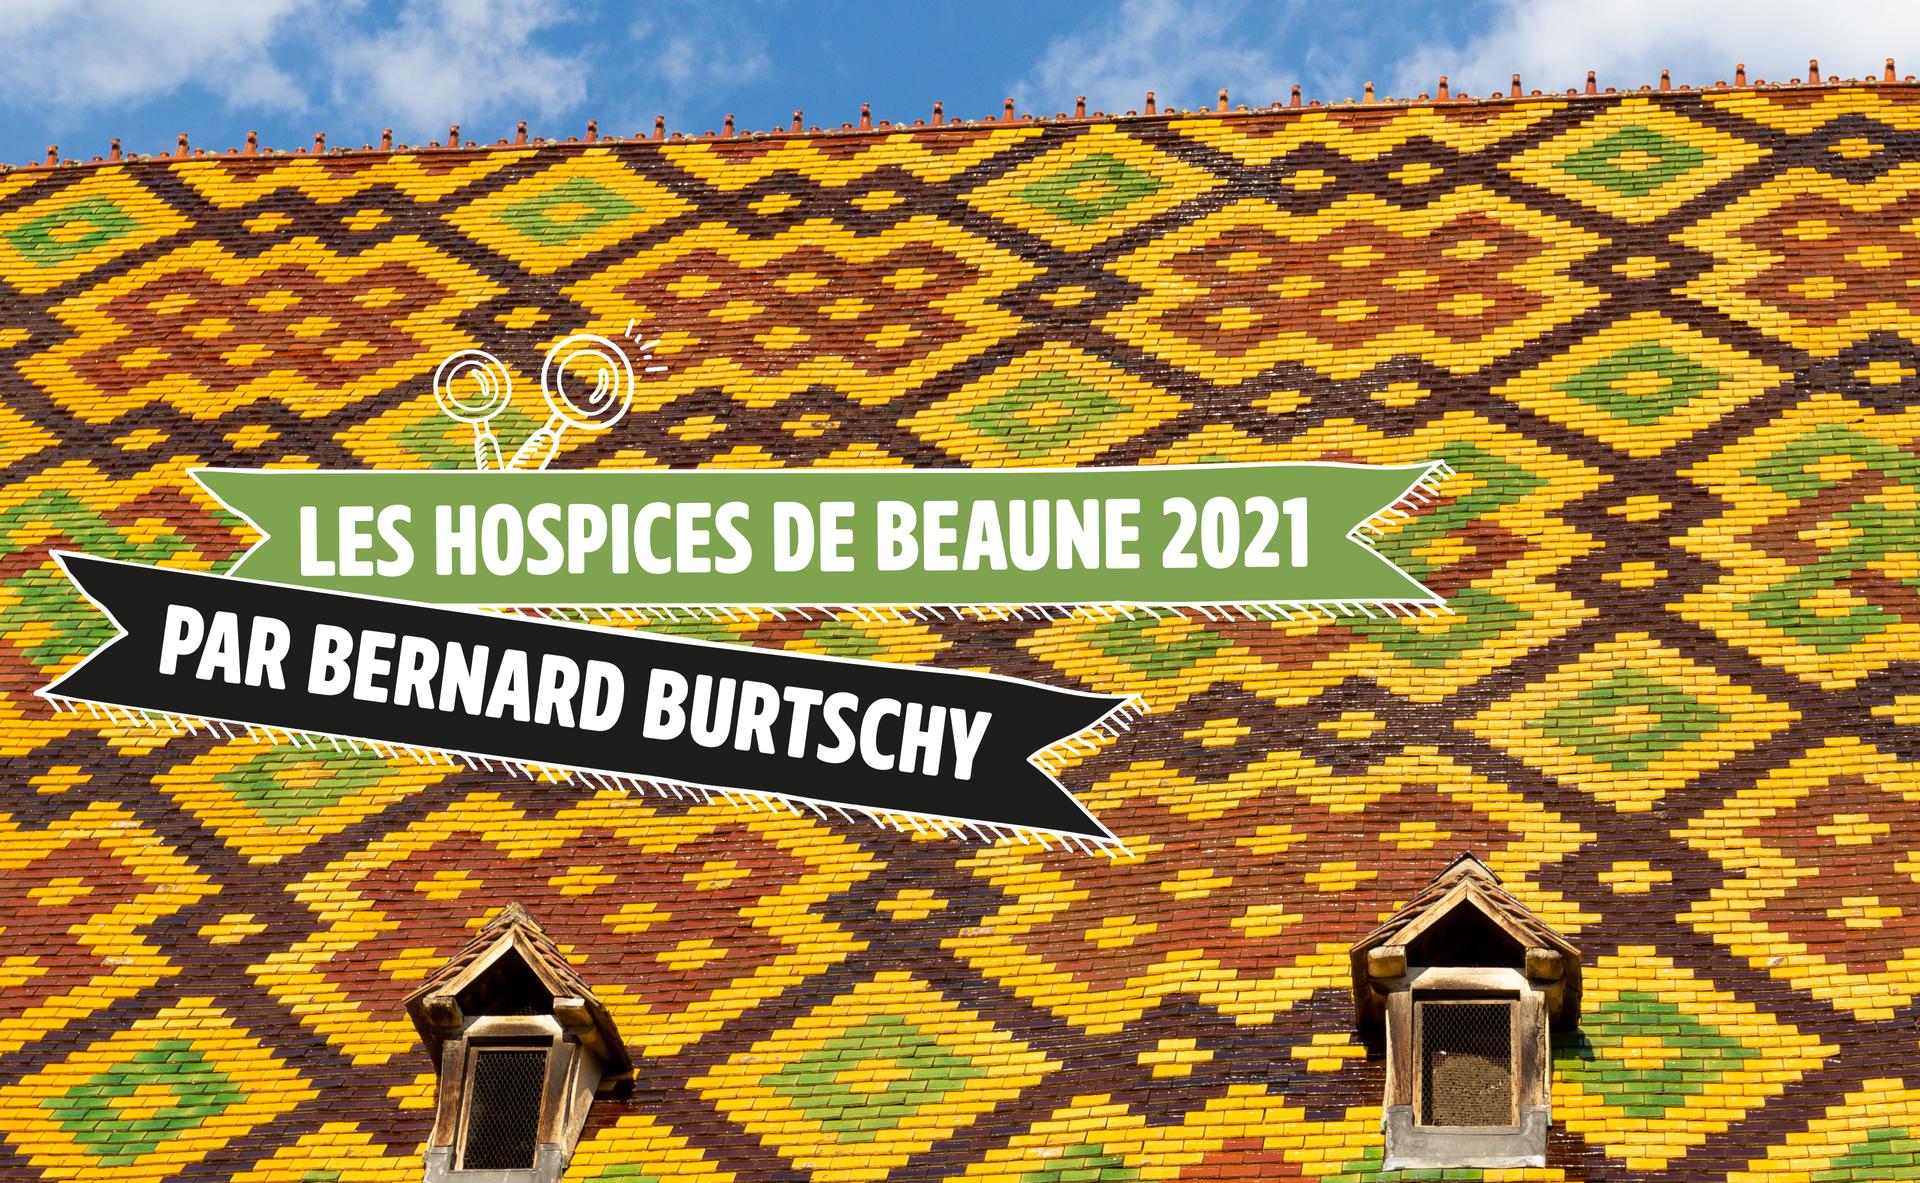 Les Hospices de Beaune 2021 par Bernard Burtschy